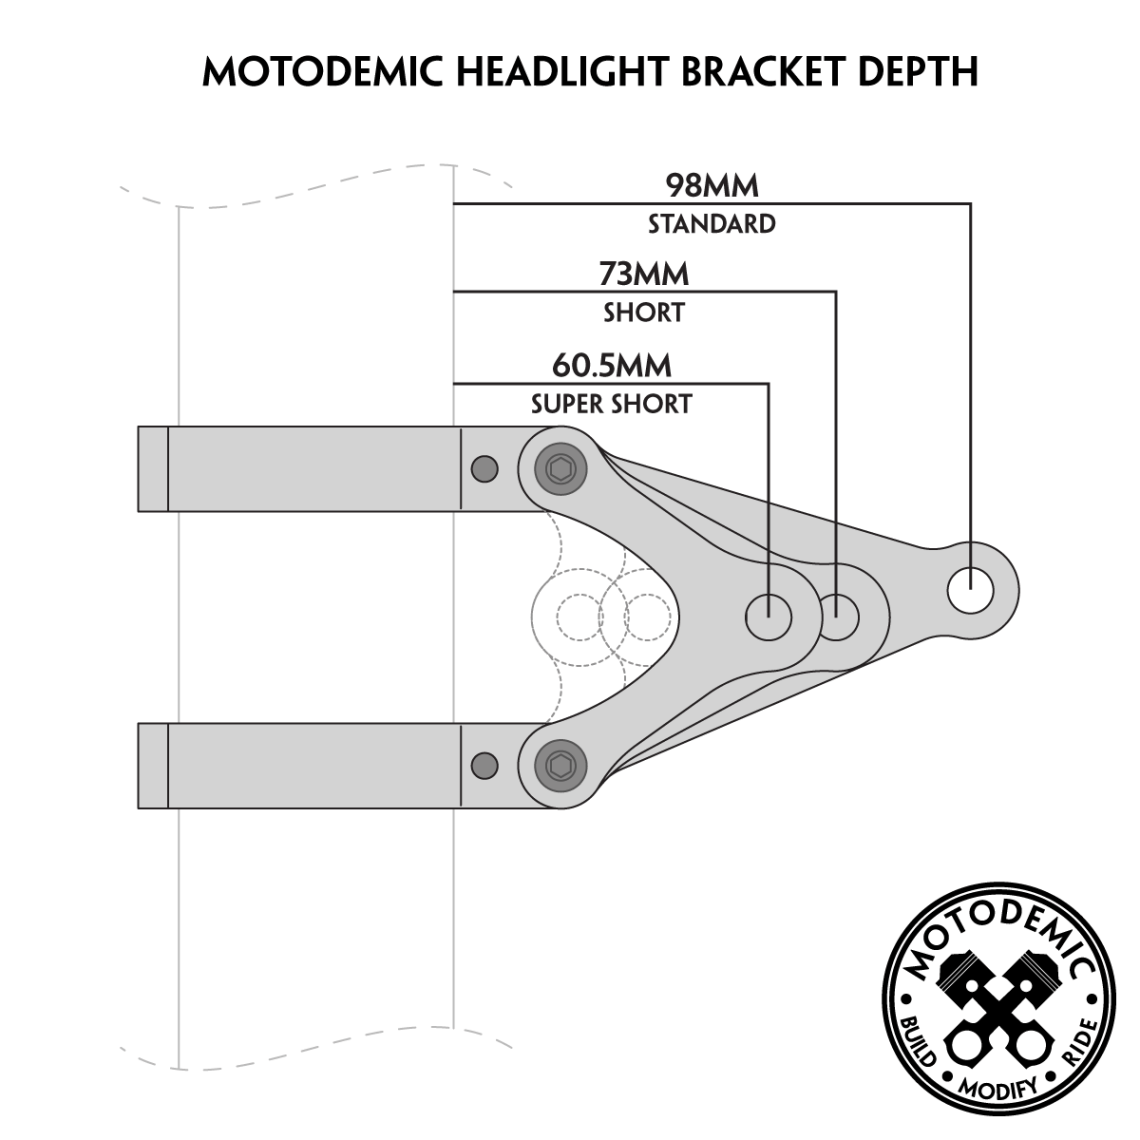 35mm Motodemic Headlight Brackets